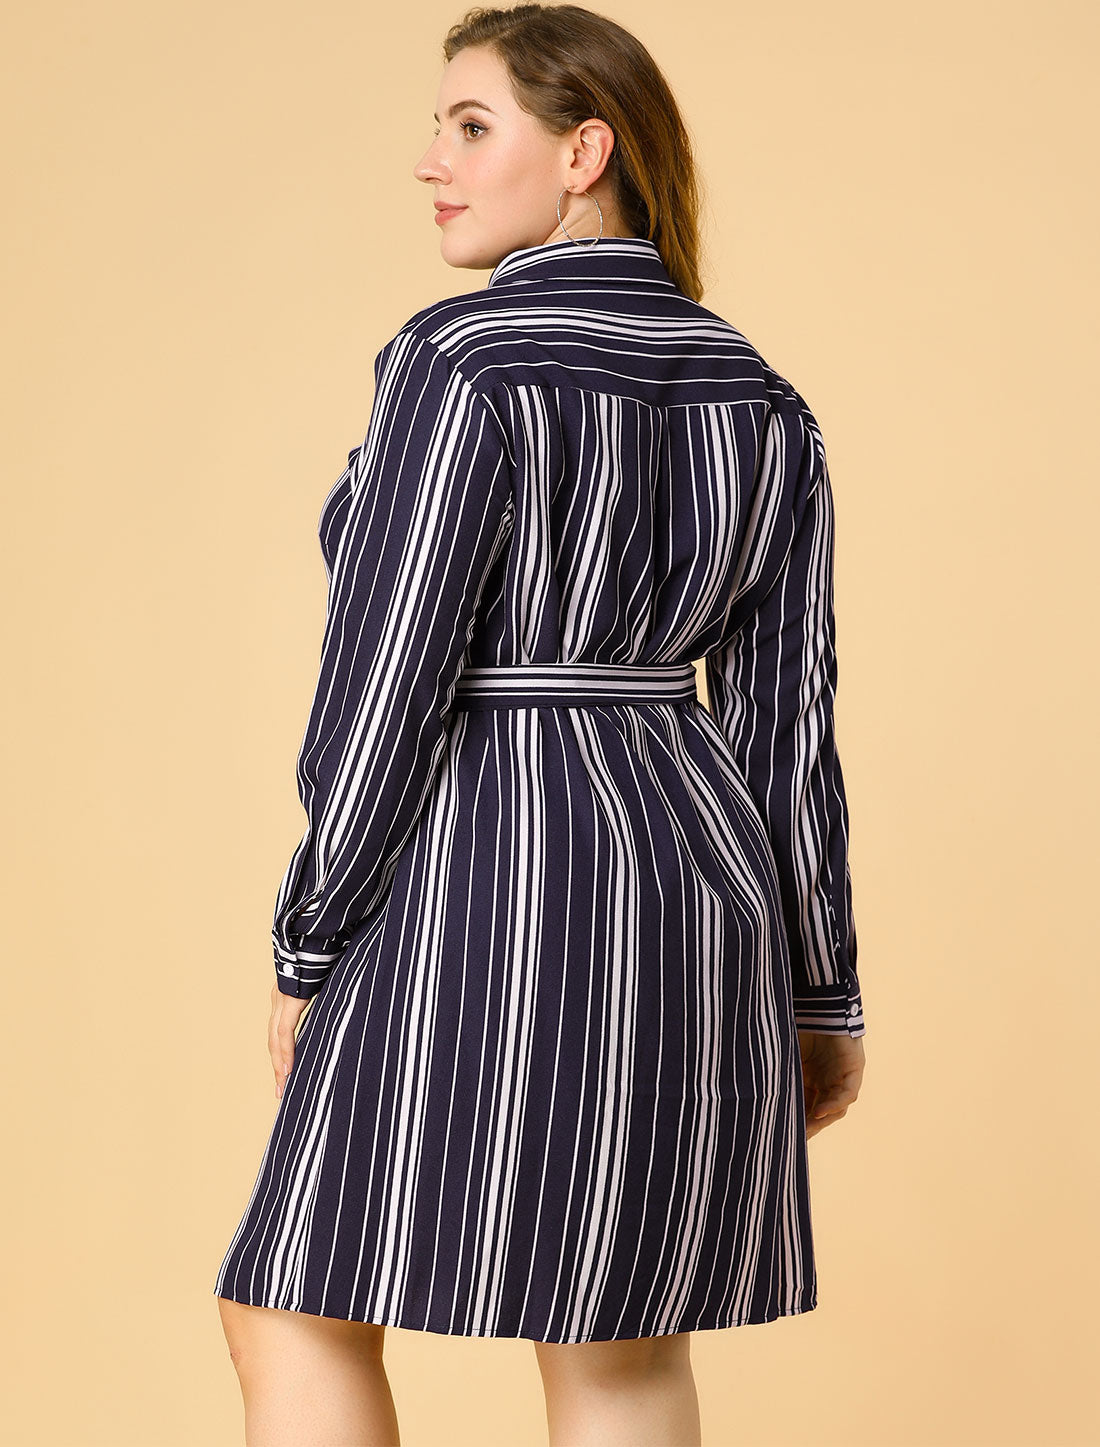 Bublédon Plus Size Long Sleeve Button Up Striped Shirt Dress